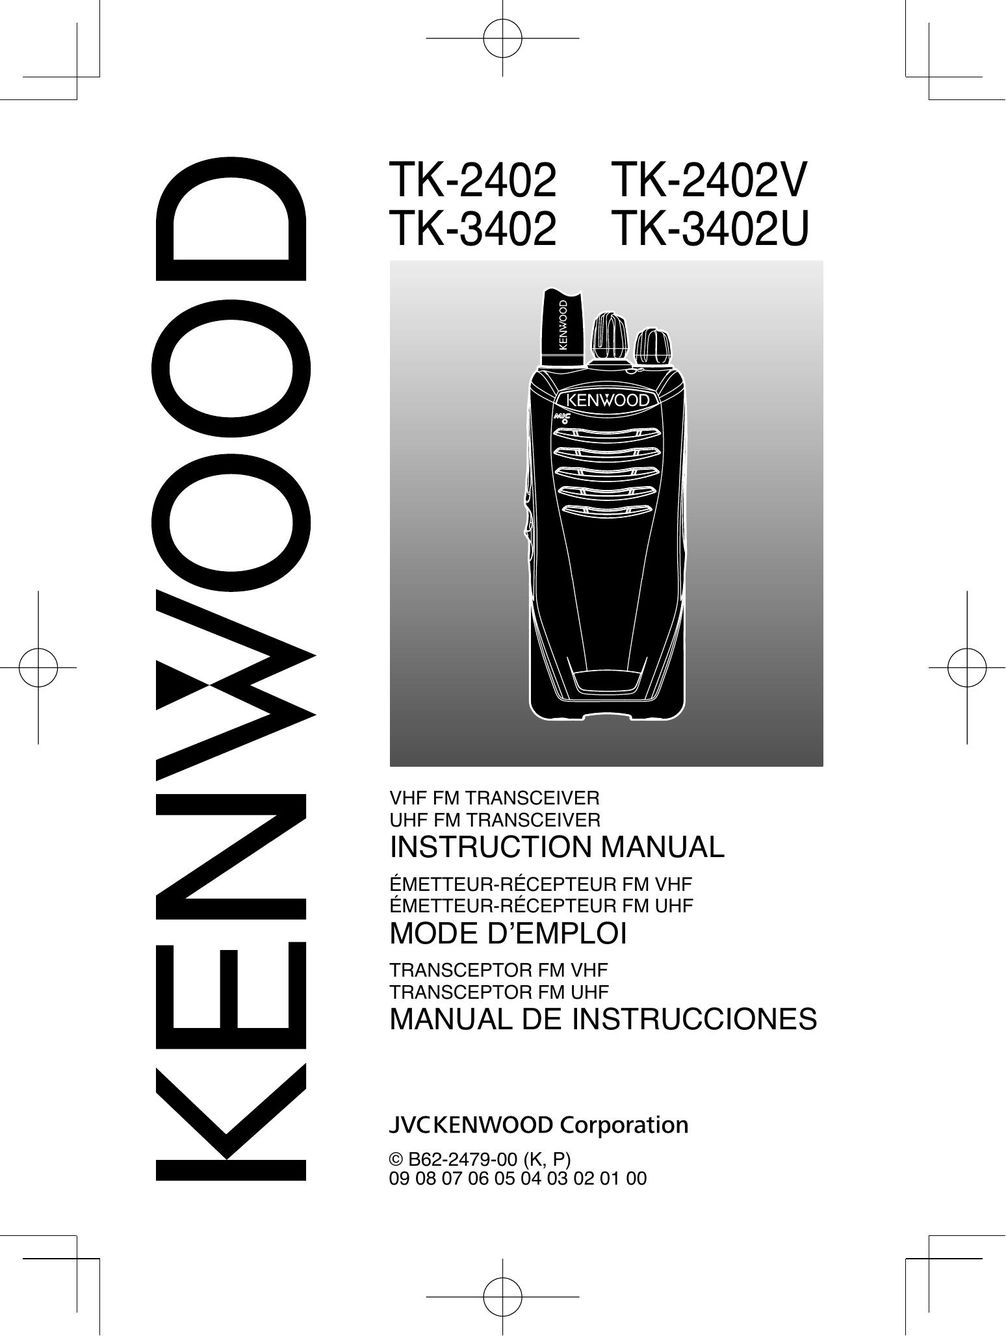 Kenwood TK-3402U Satellite Radio User Manual